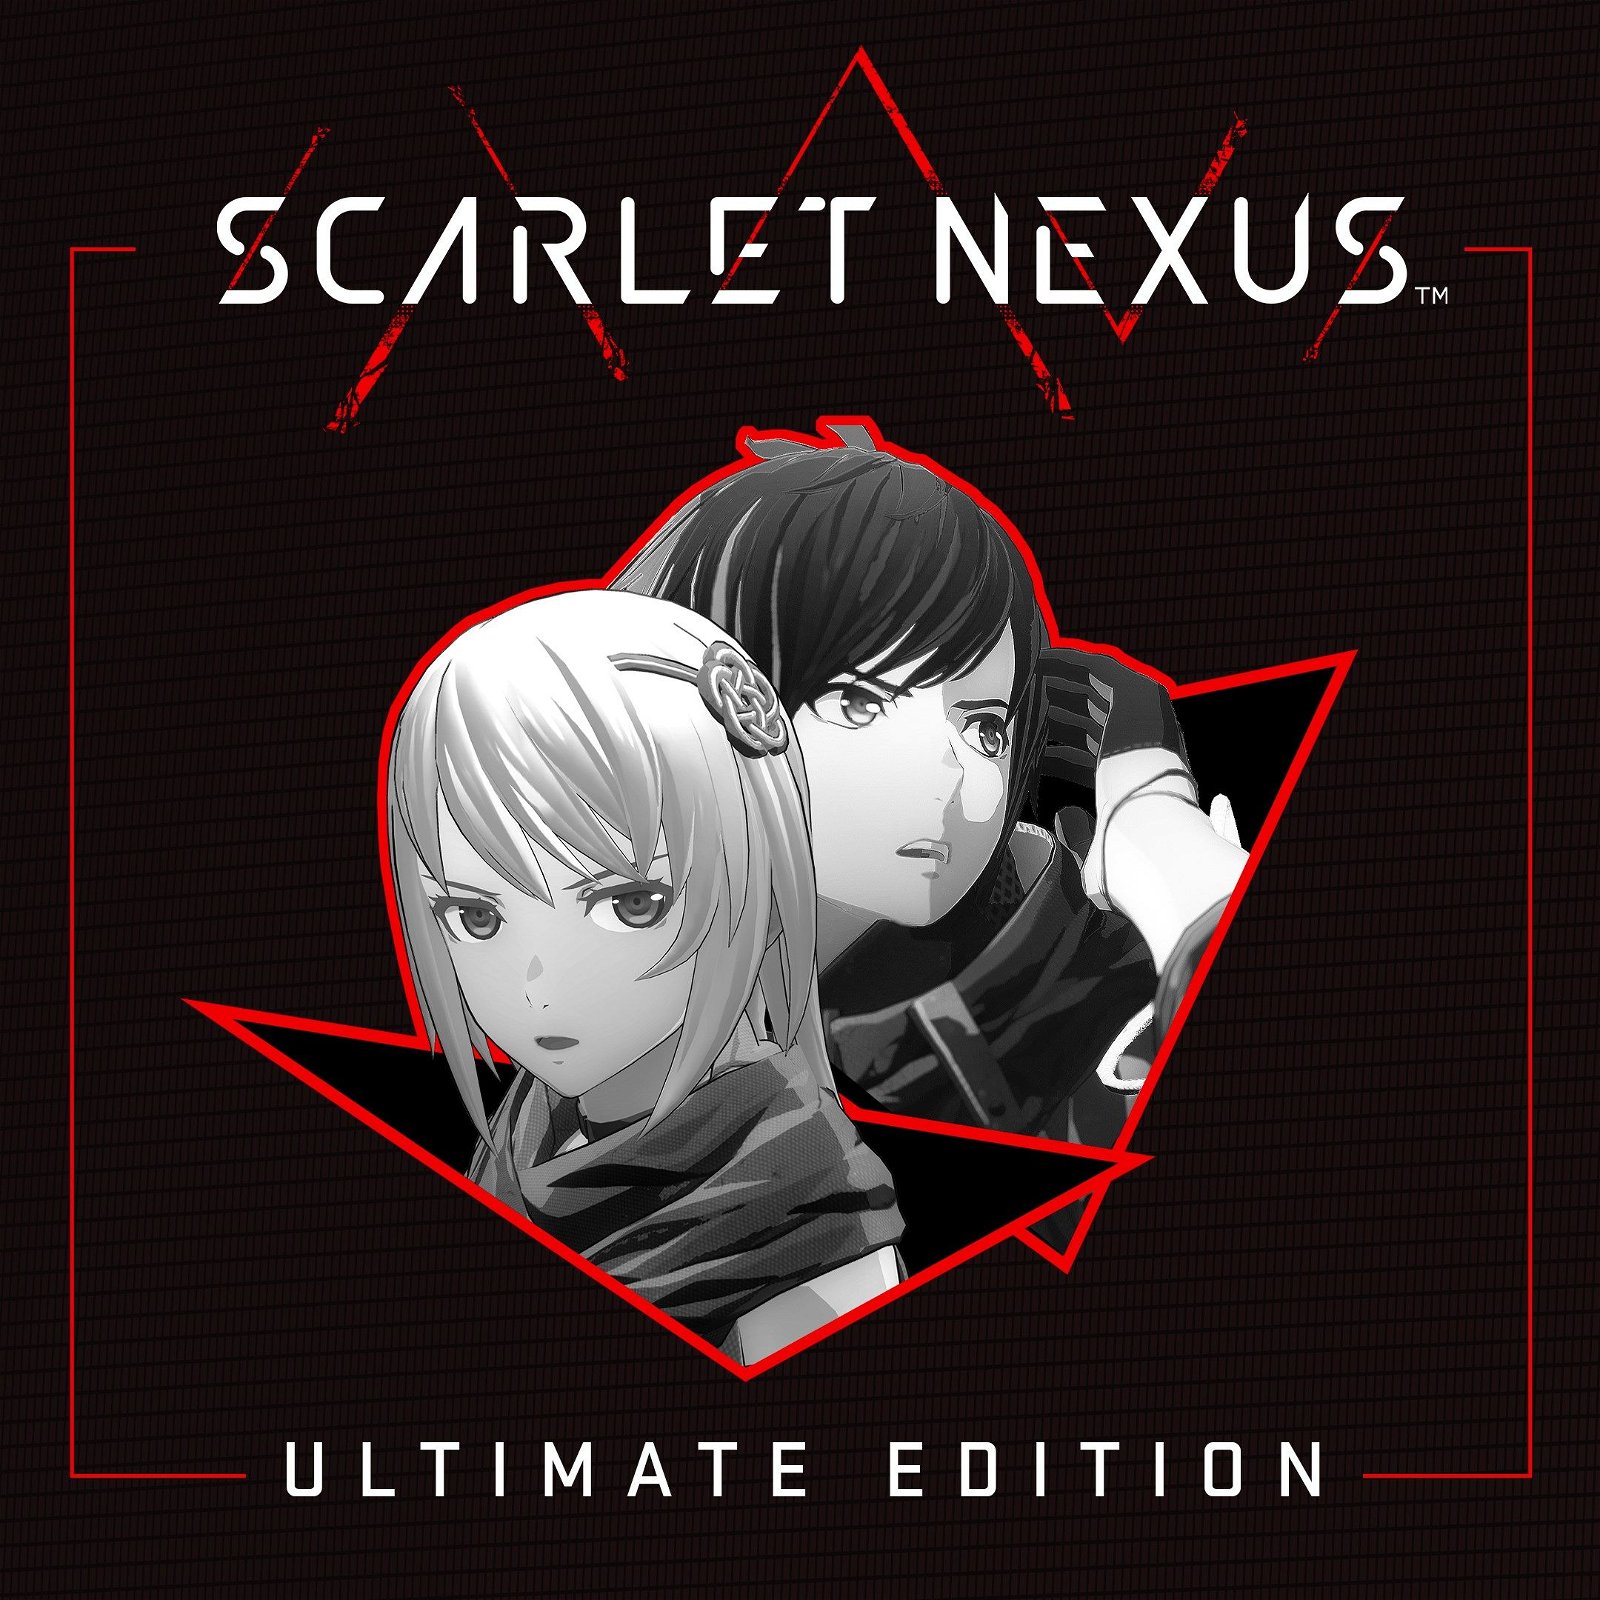 Image of SCARLET NEXUS Ultimate Edition